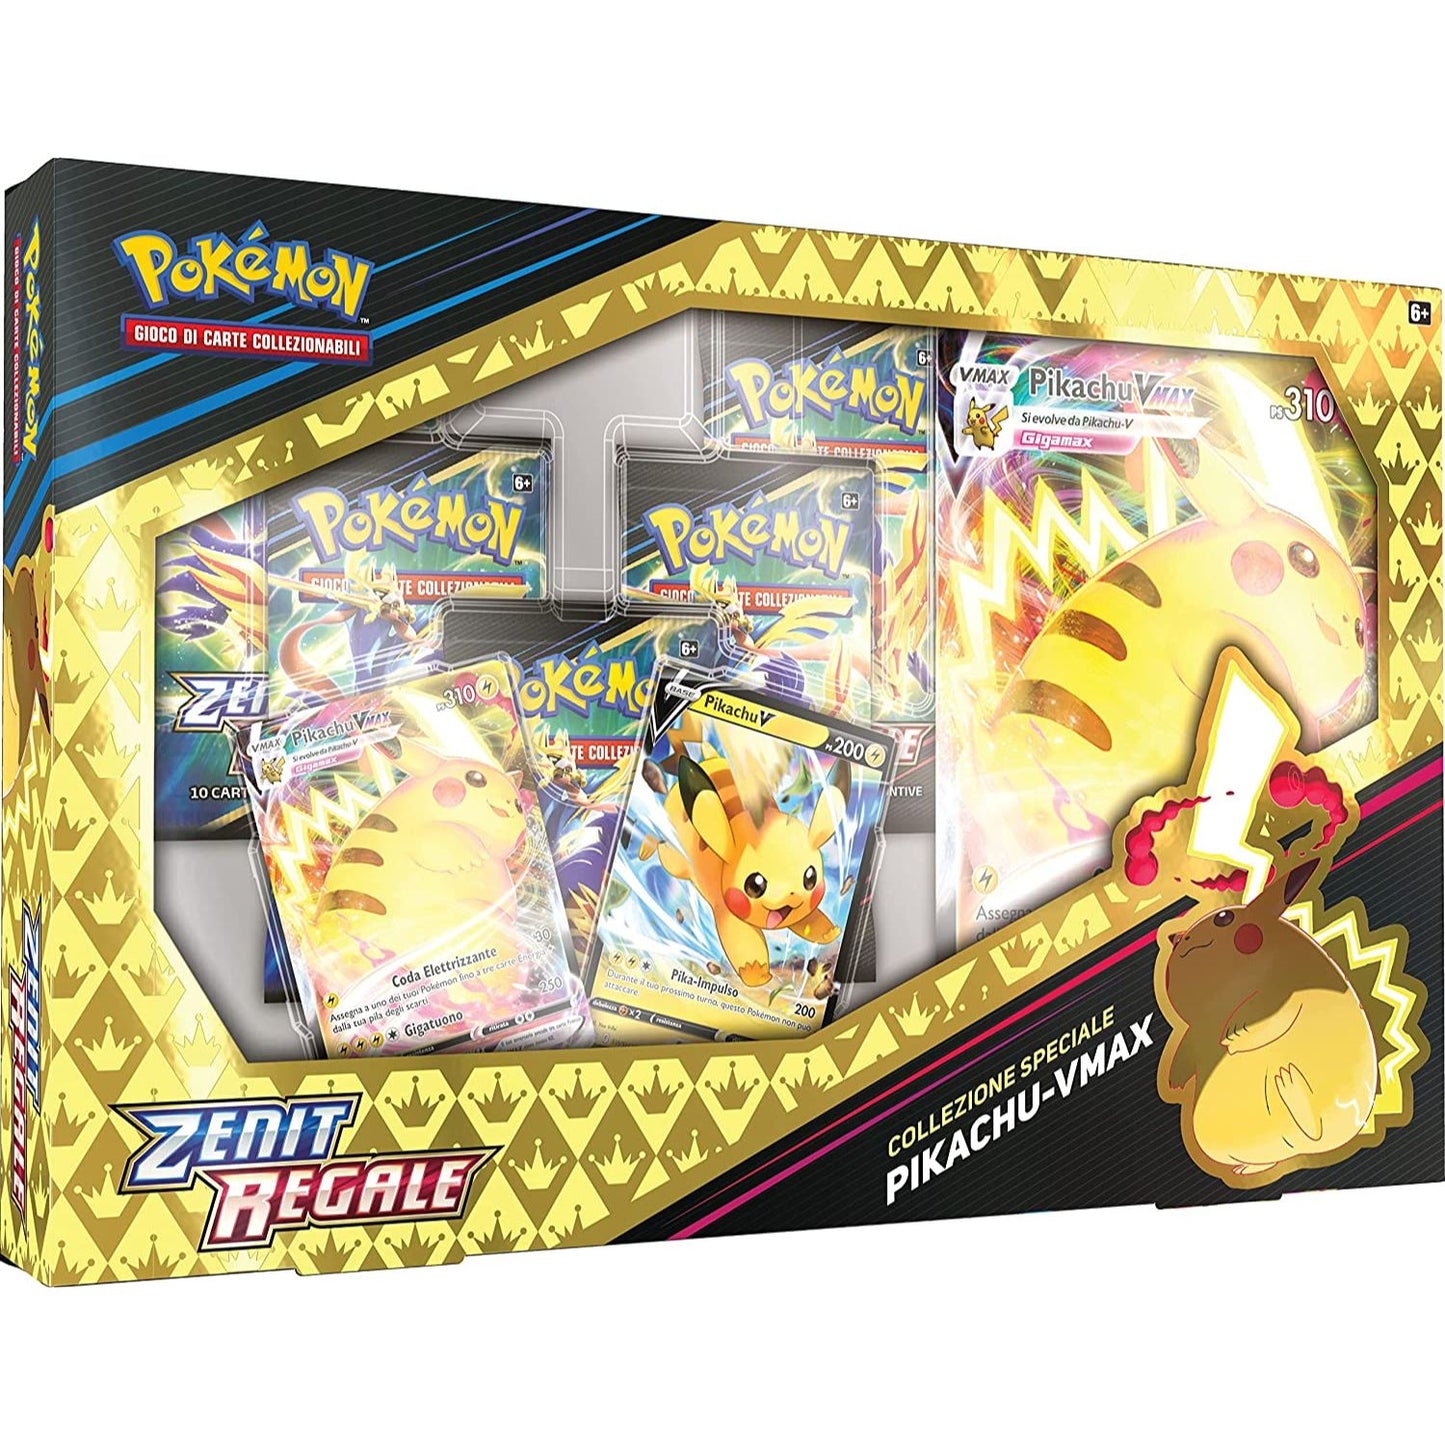 Pokémon Vmax Premium Box Pikachu